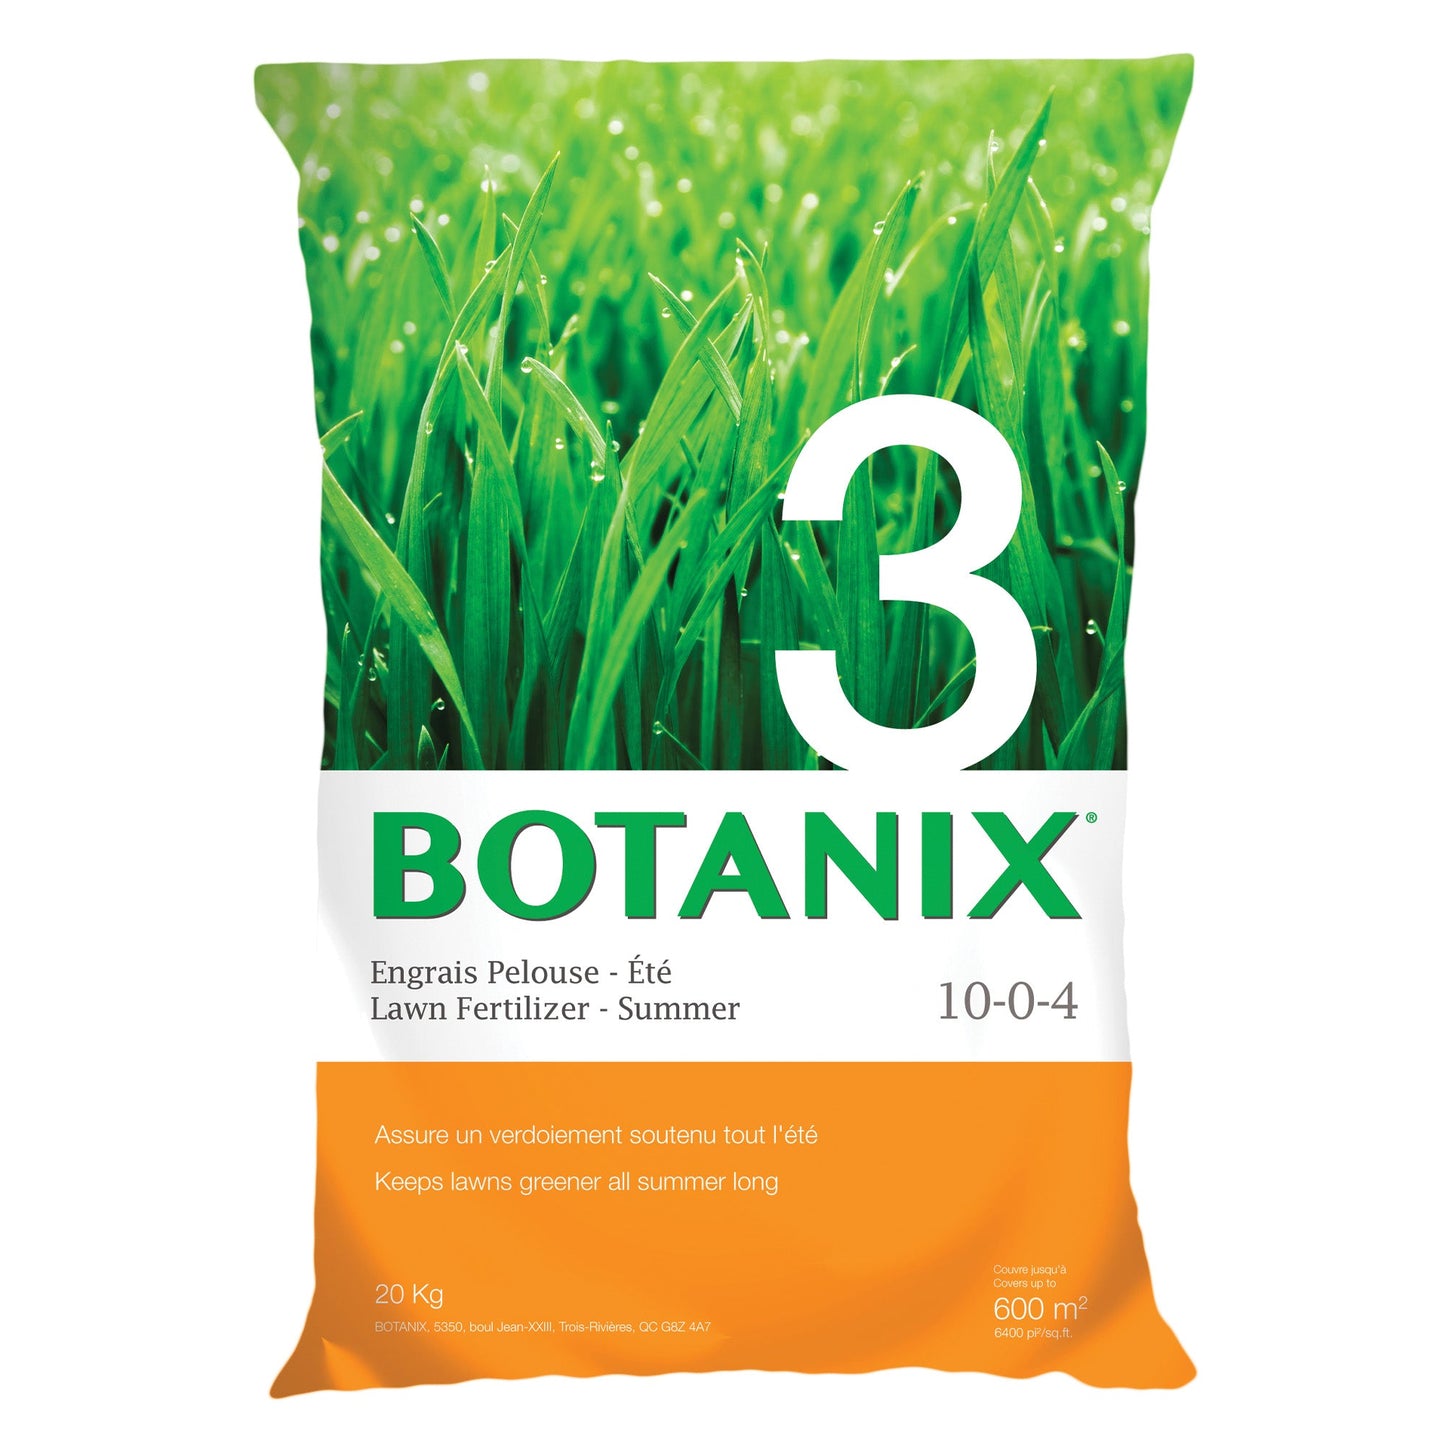 4 Step Lawn Fertilizer - Step #3 - Botanix